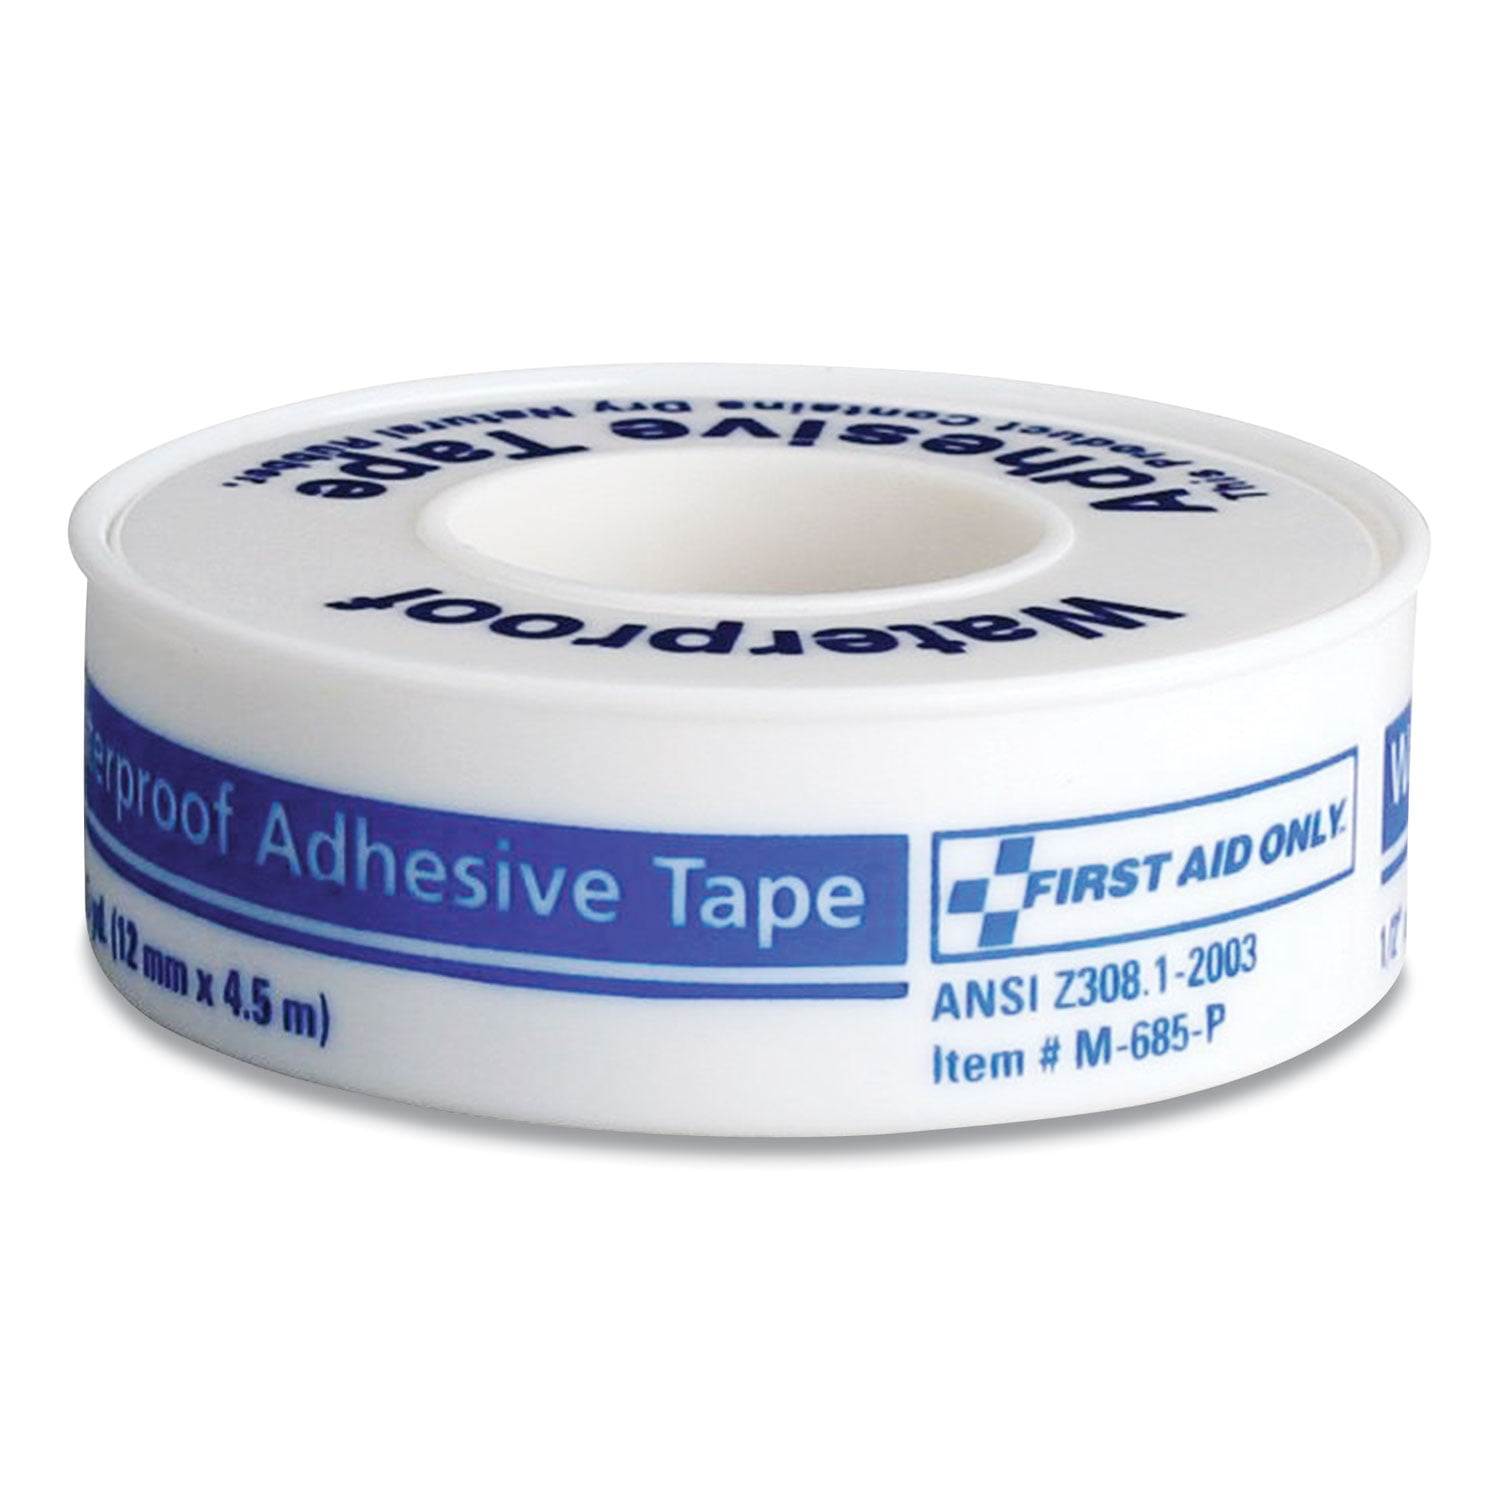 remove medical tape